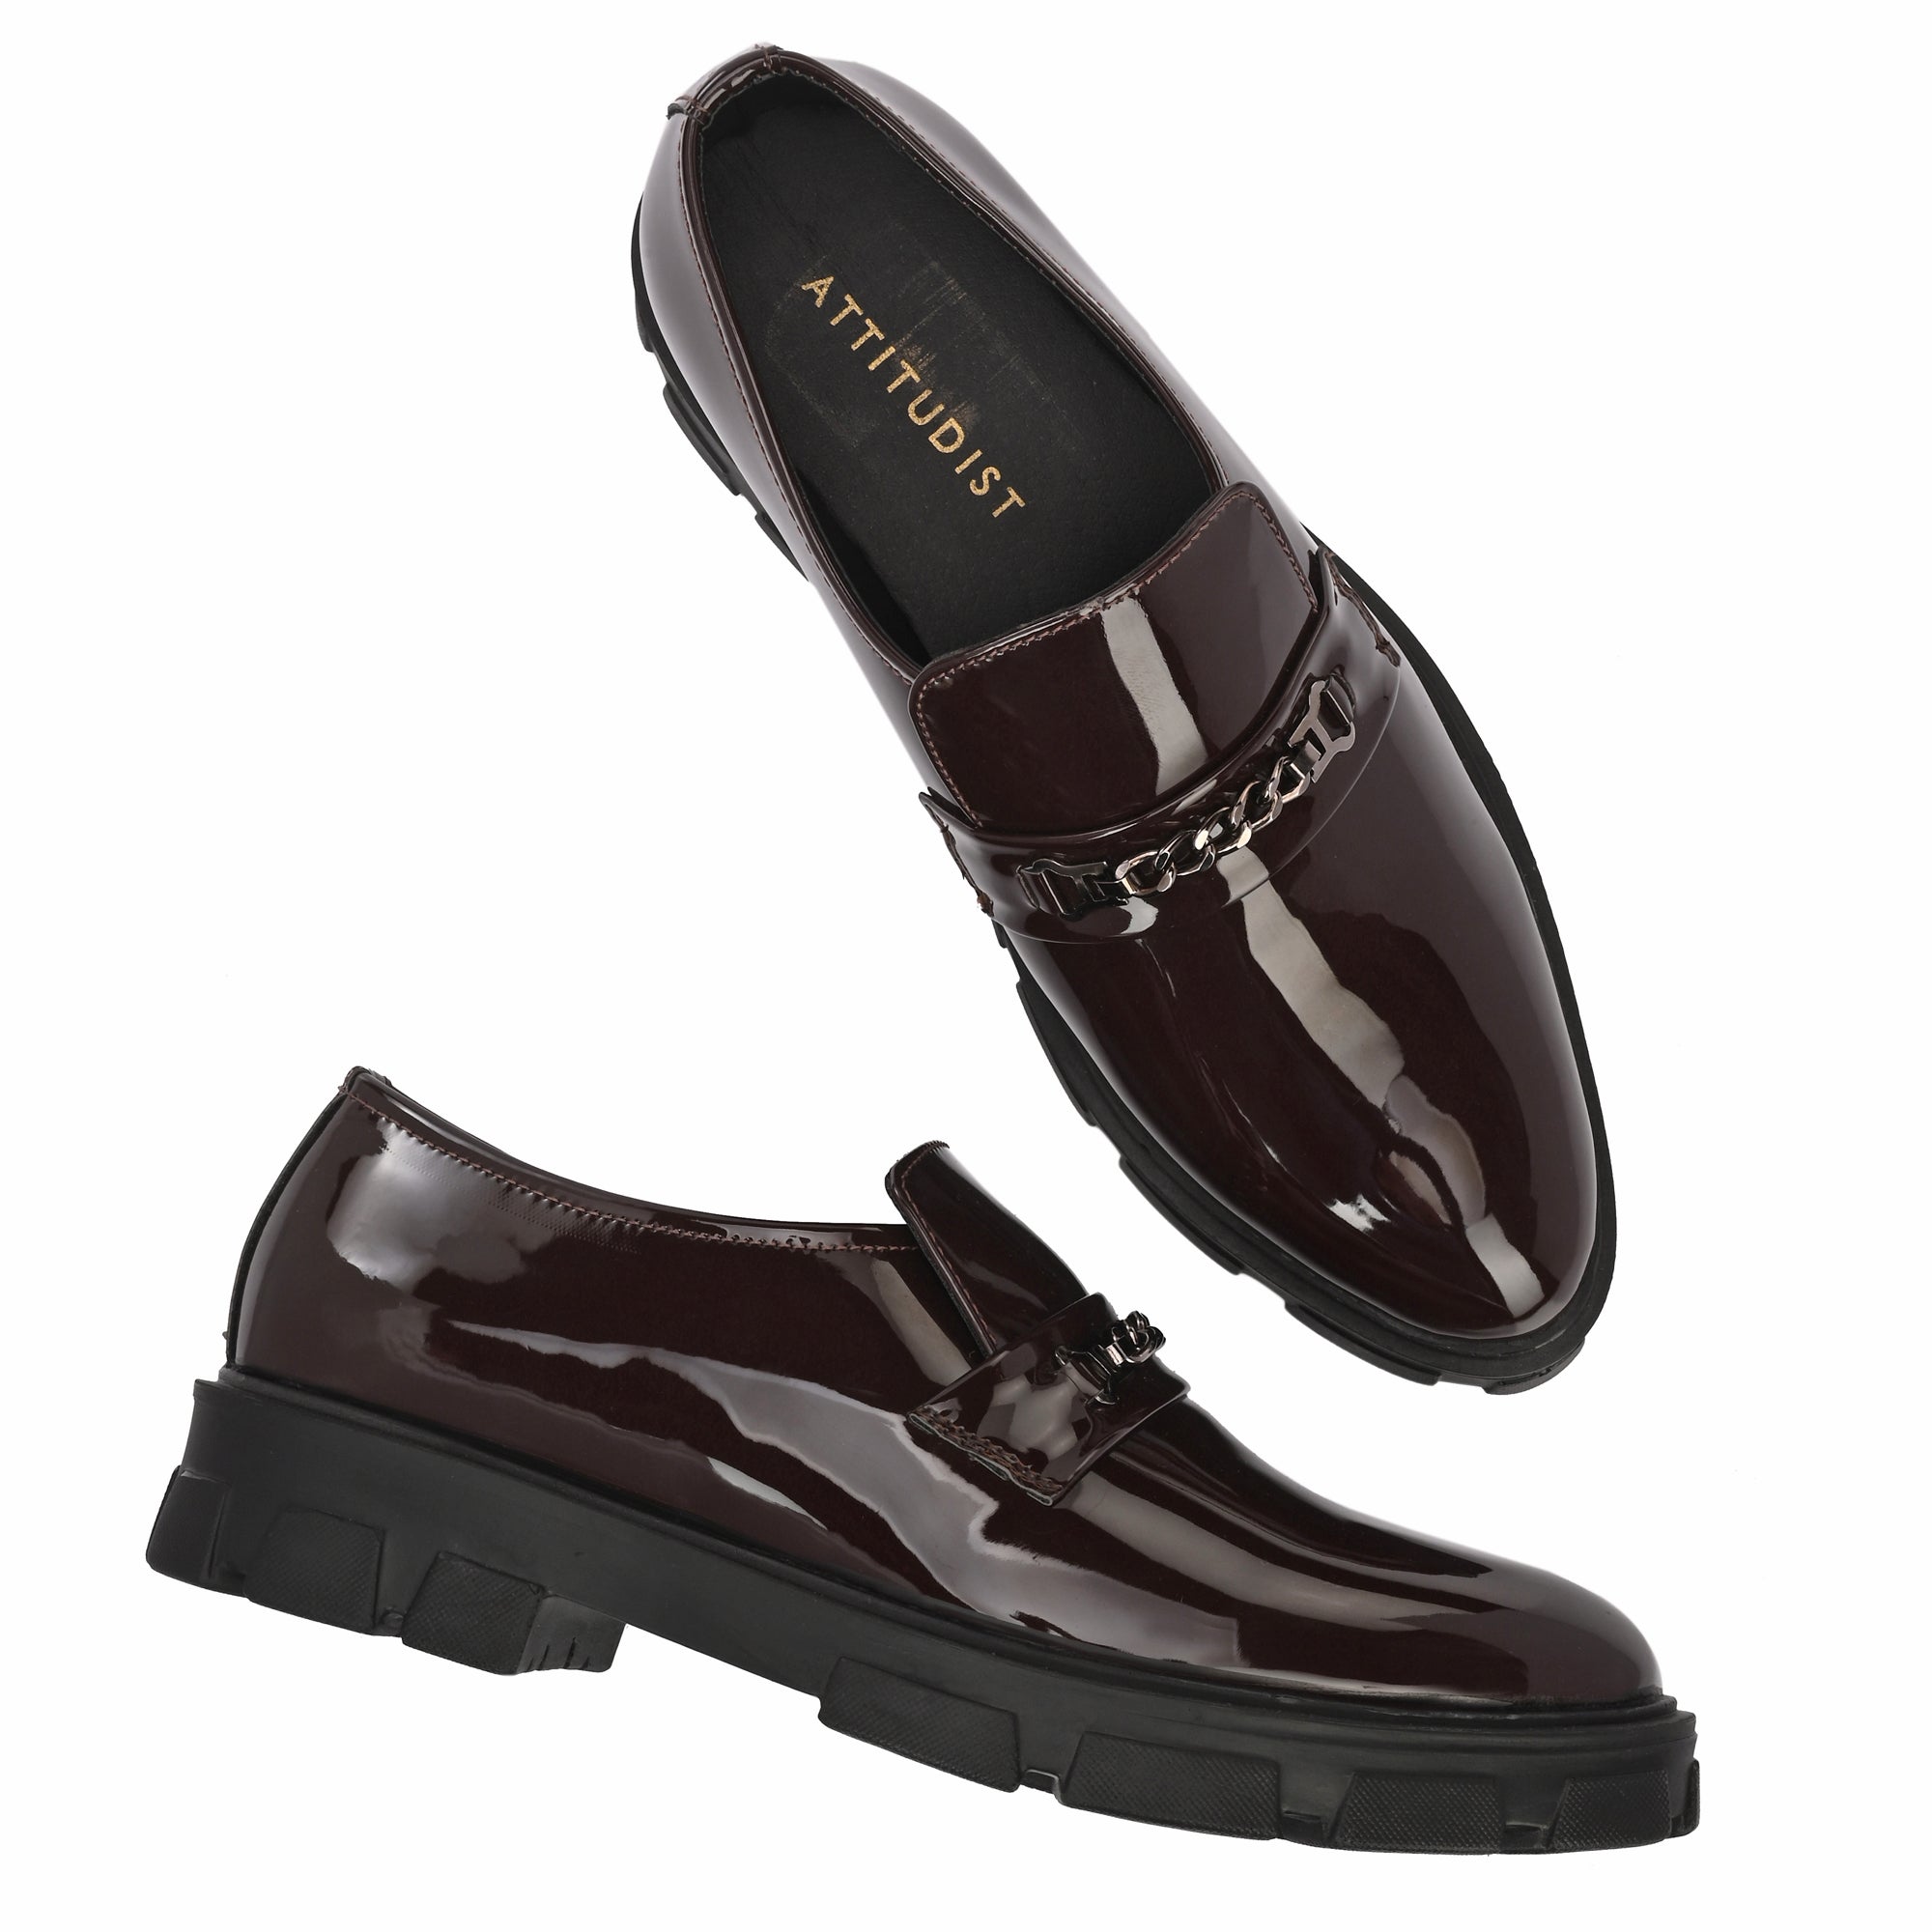 attitudist-coffee-brown-high-heel-slip-on-moccasin-shoes-for-men